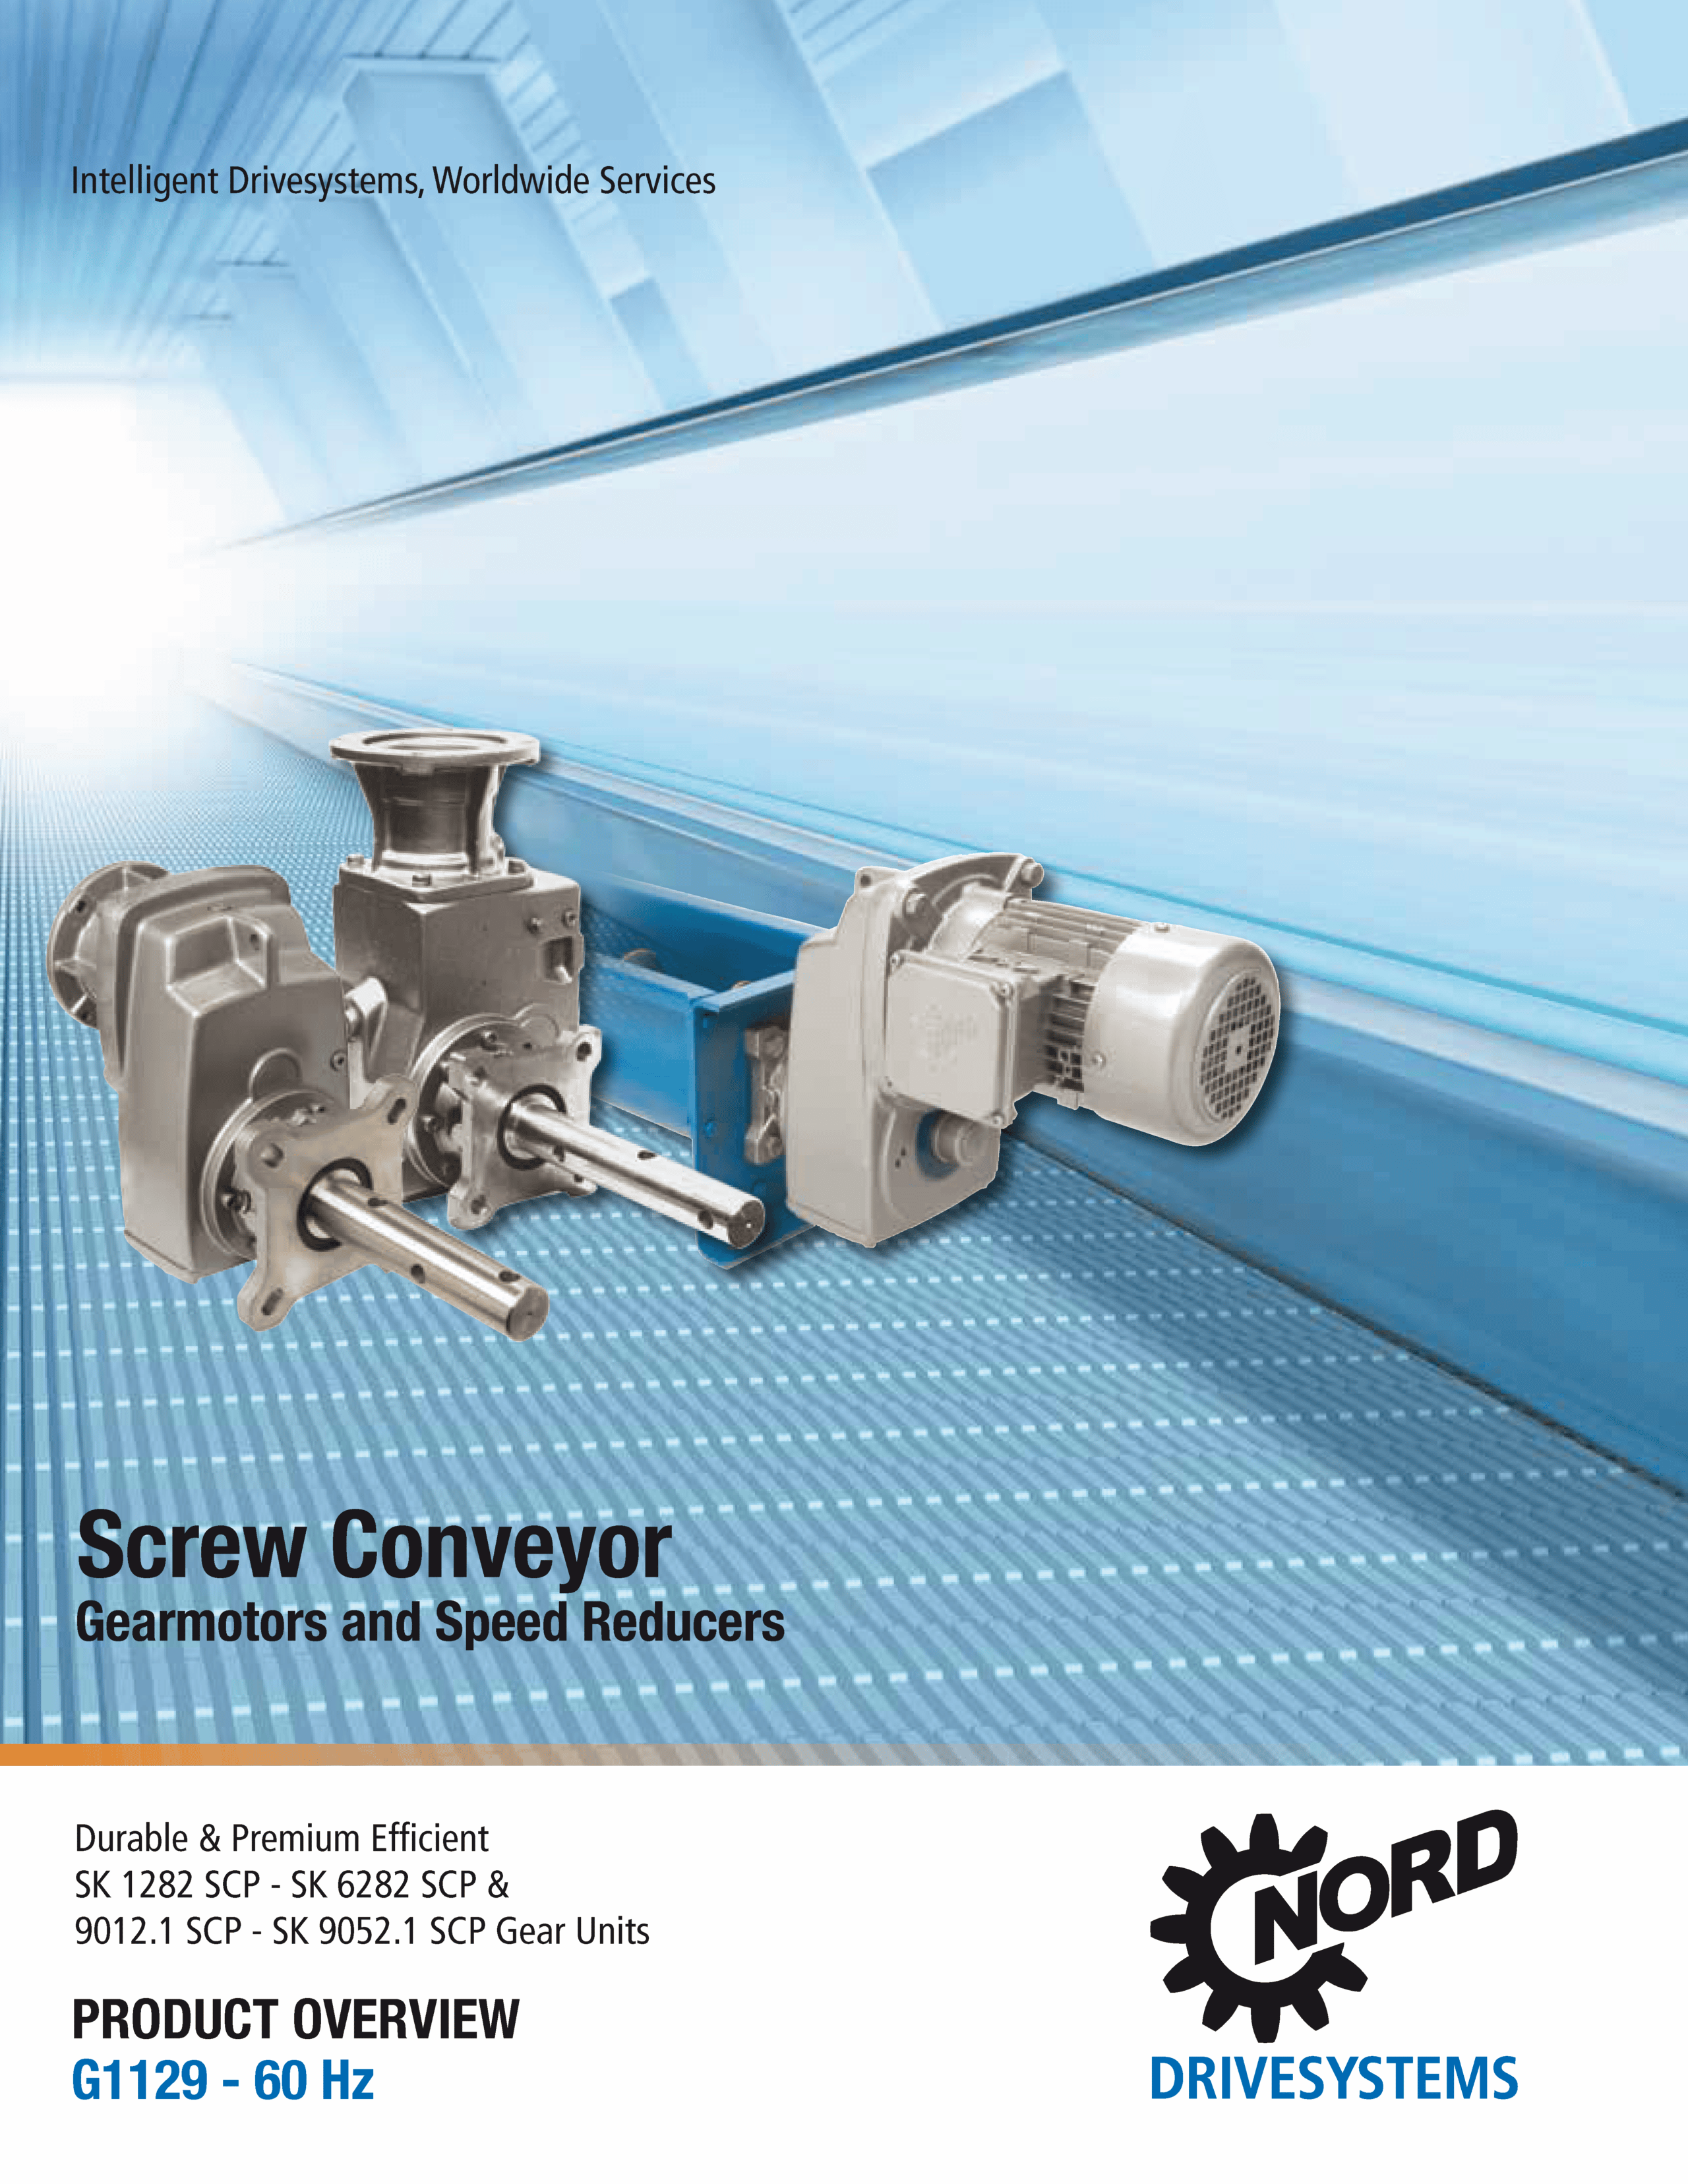 Nord Screw Conveyor Catalog Cover - Screw Conveyor Parts